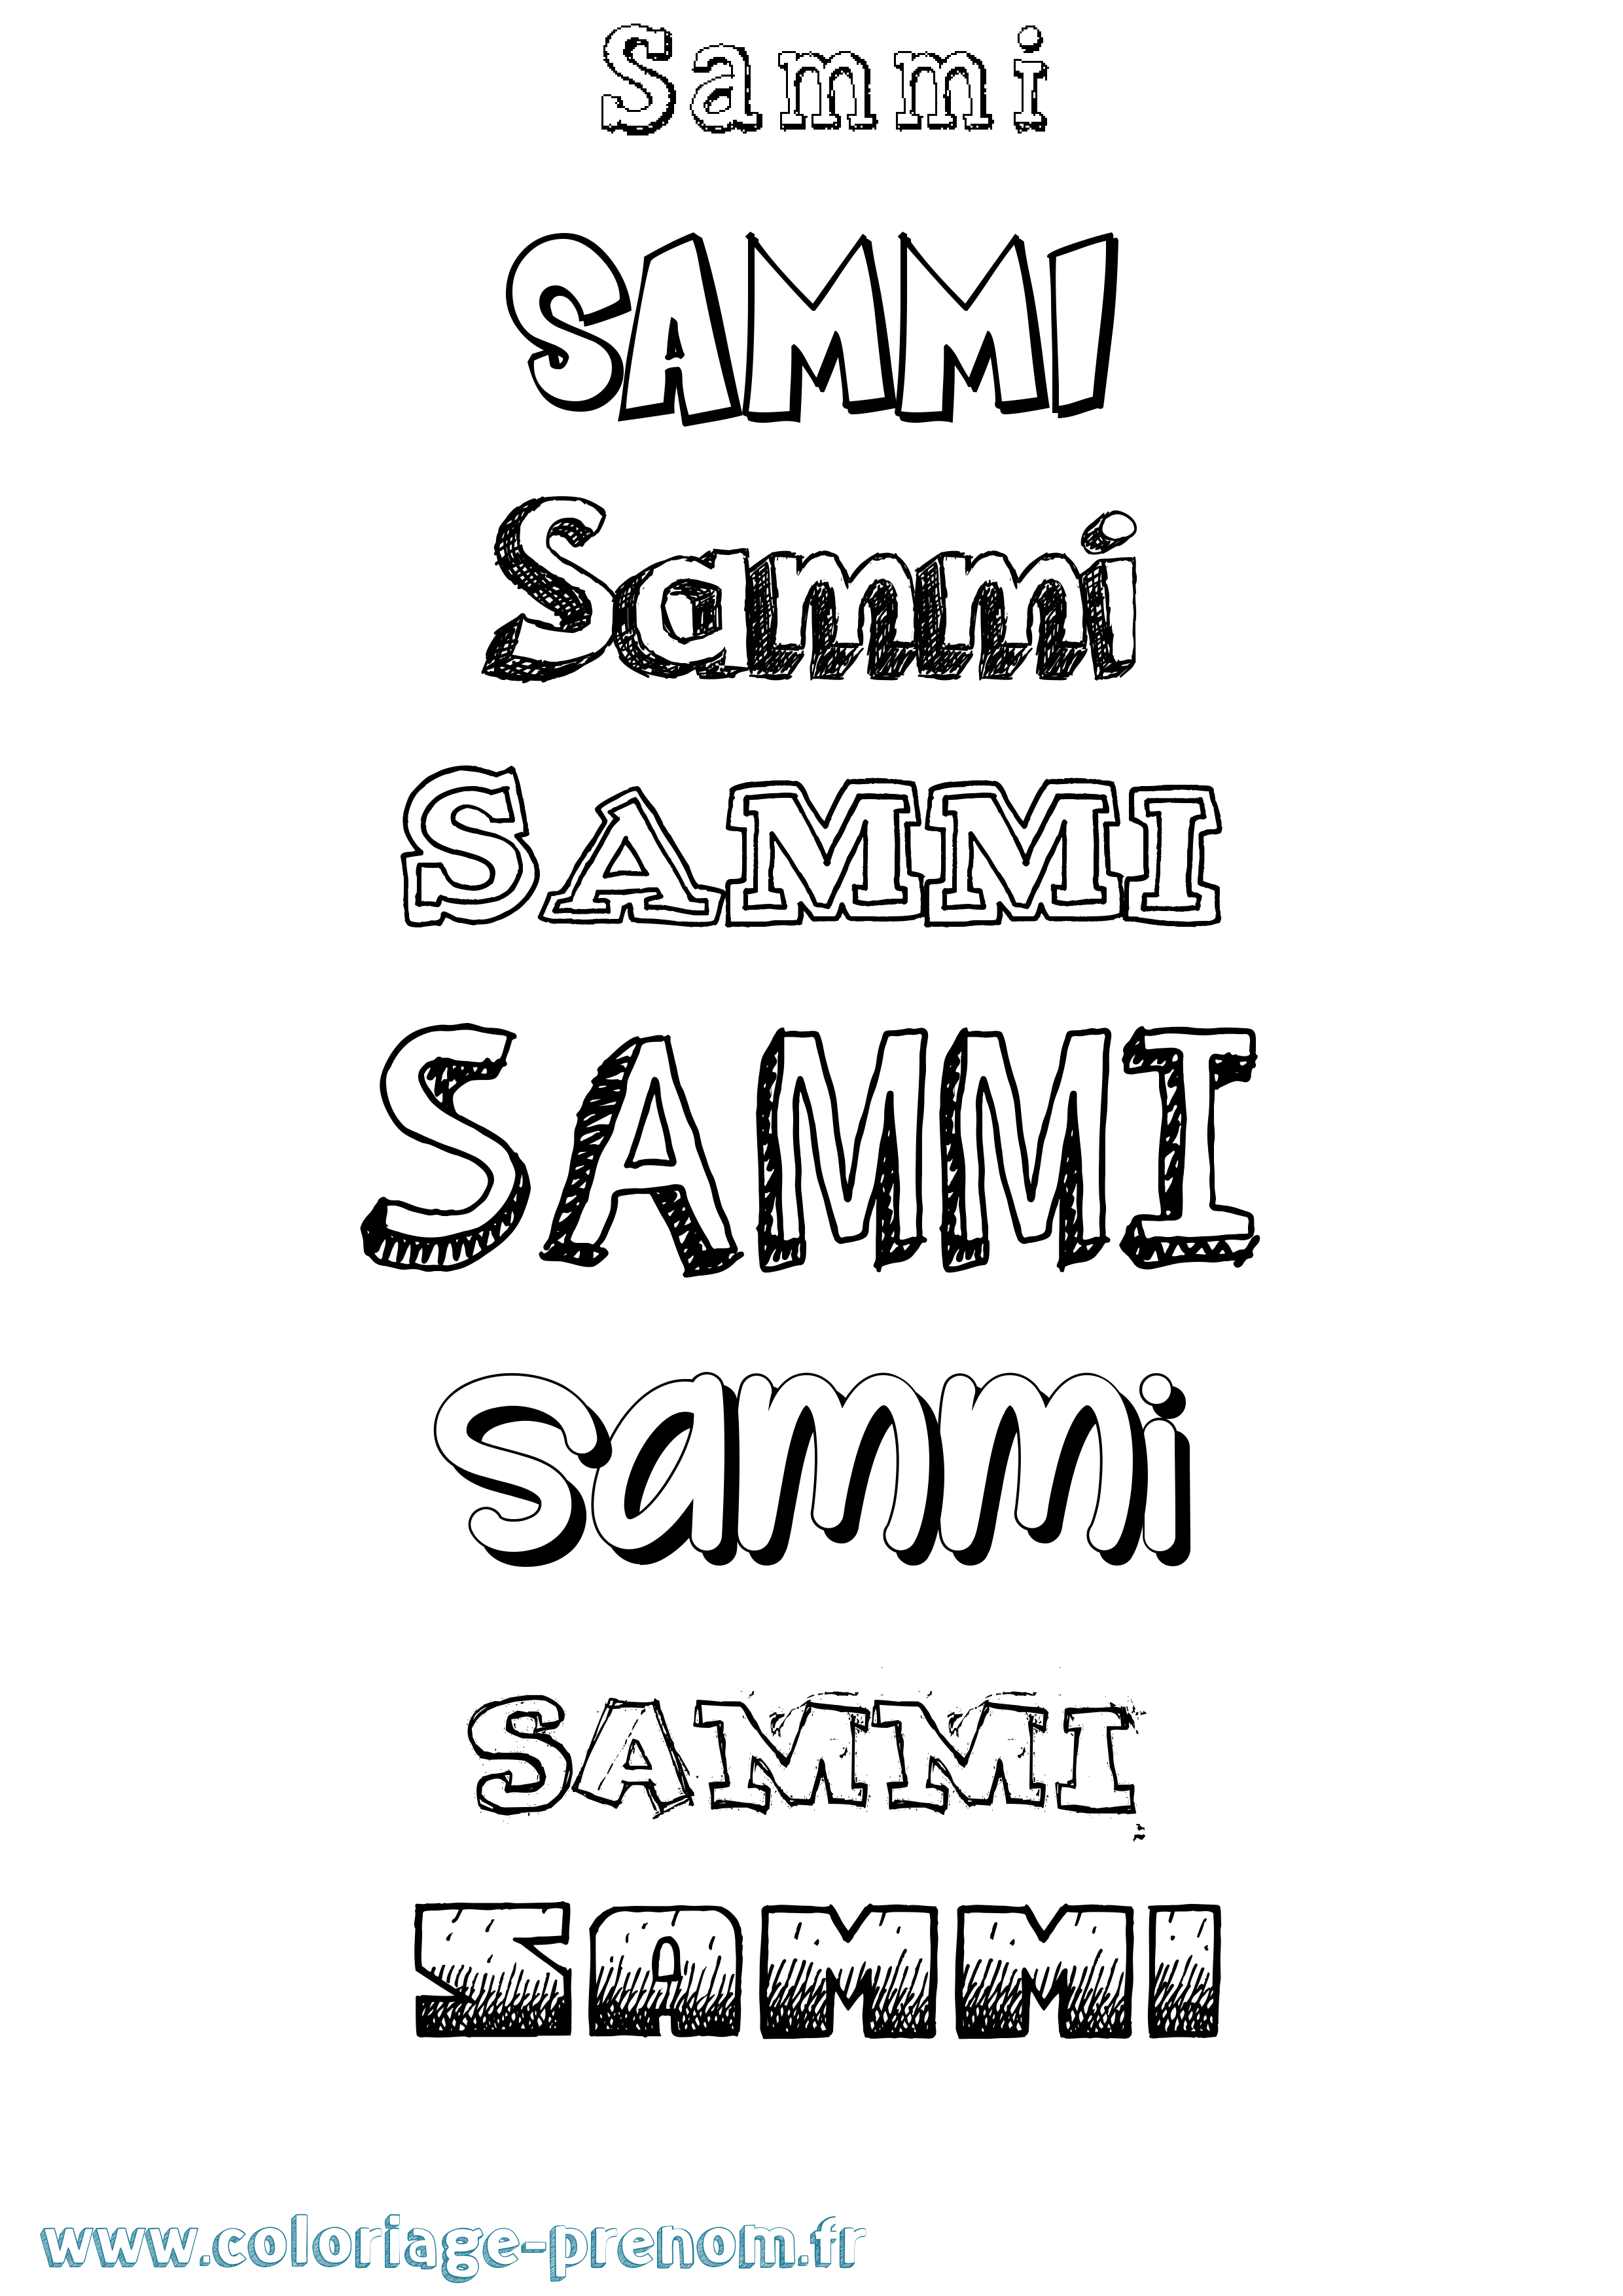 Coloriage prénom Sammi Dessiné